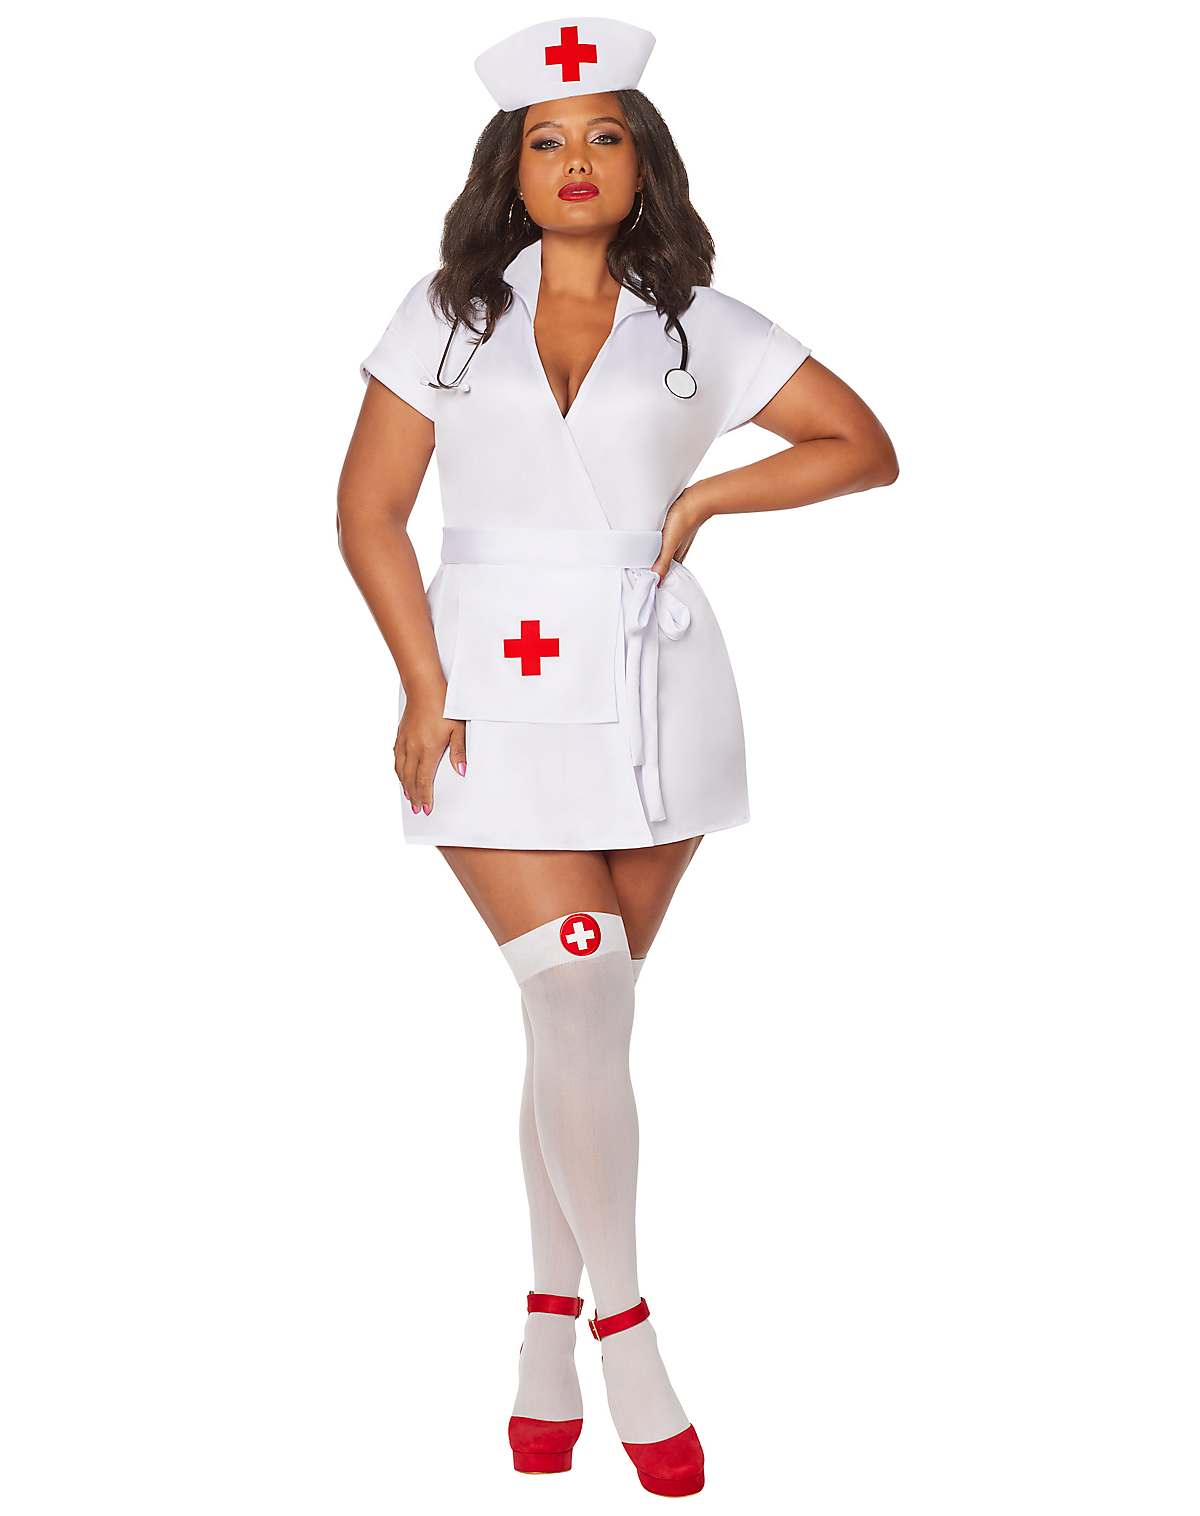 Classic nurse plus size costume